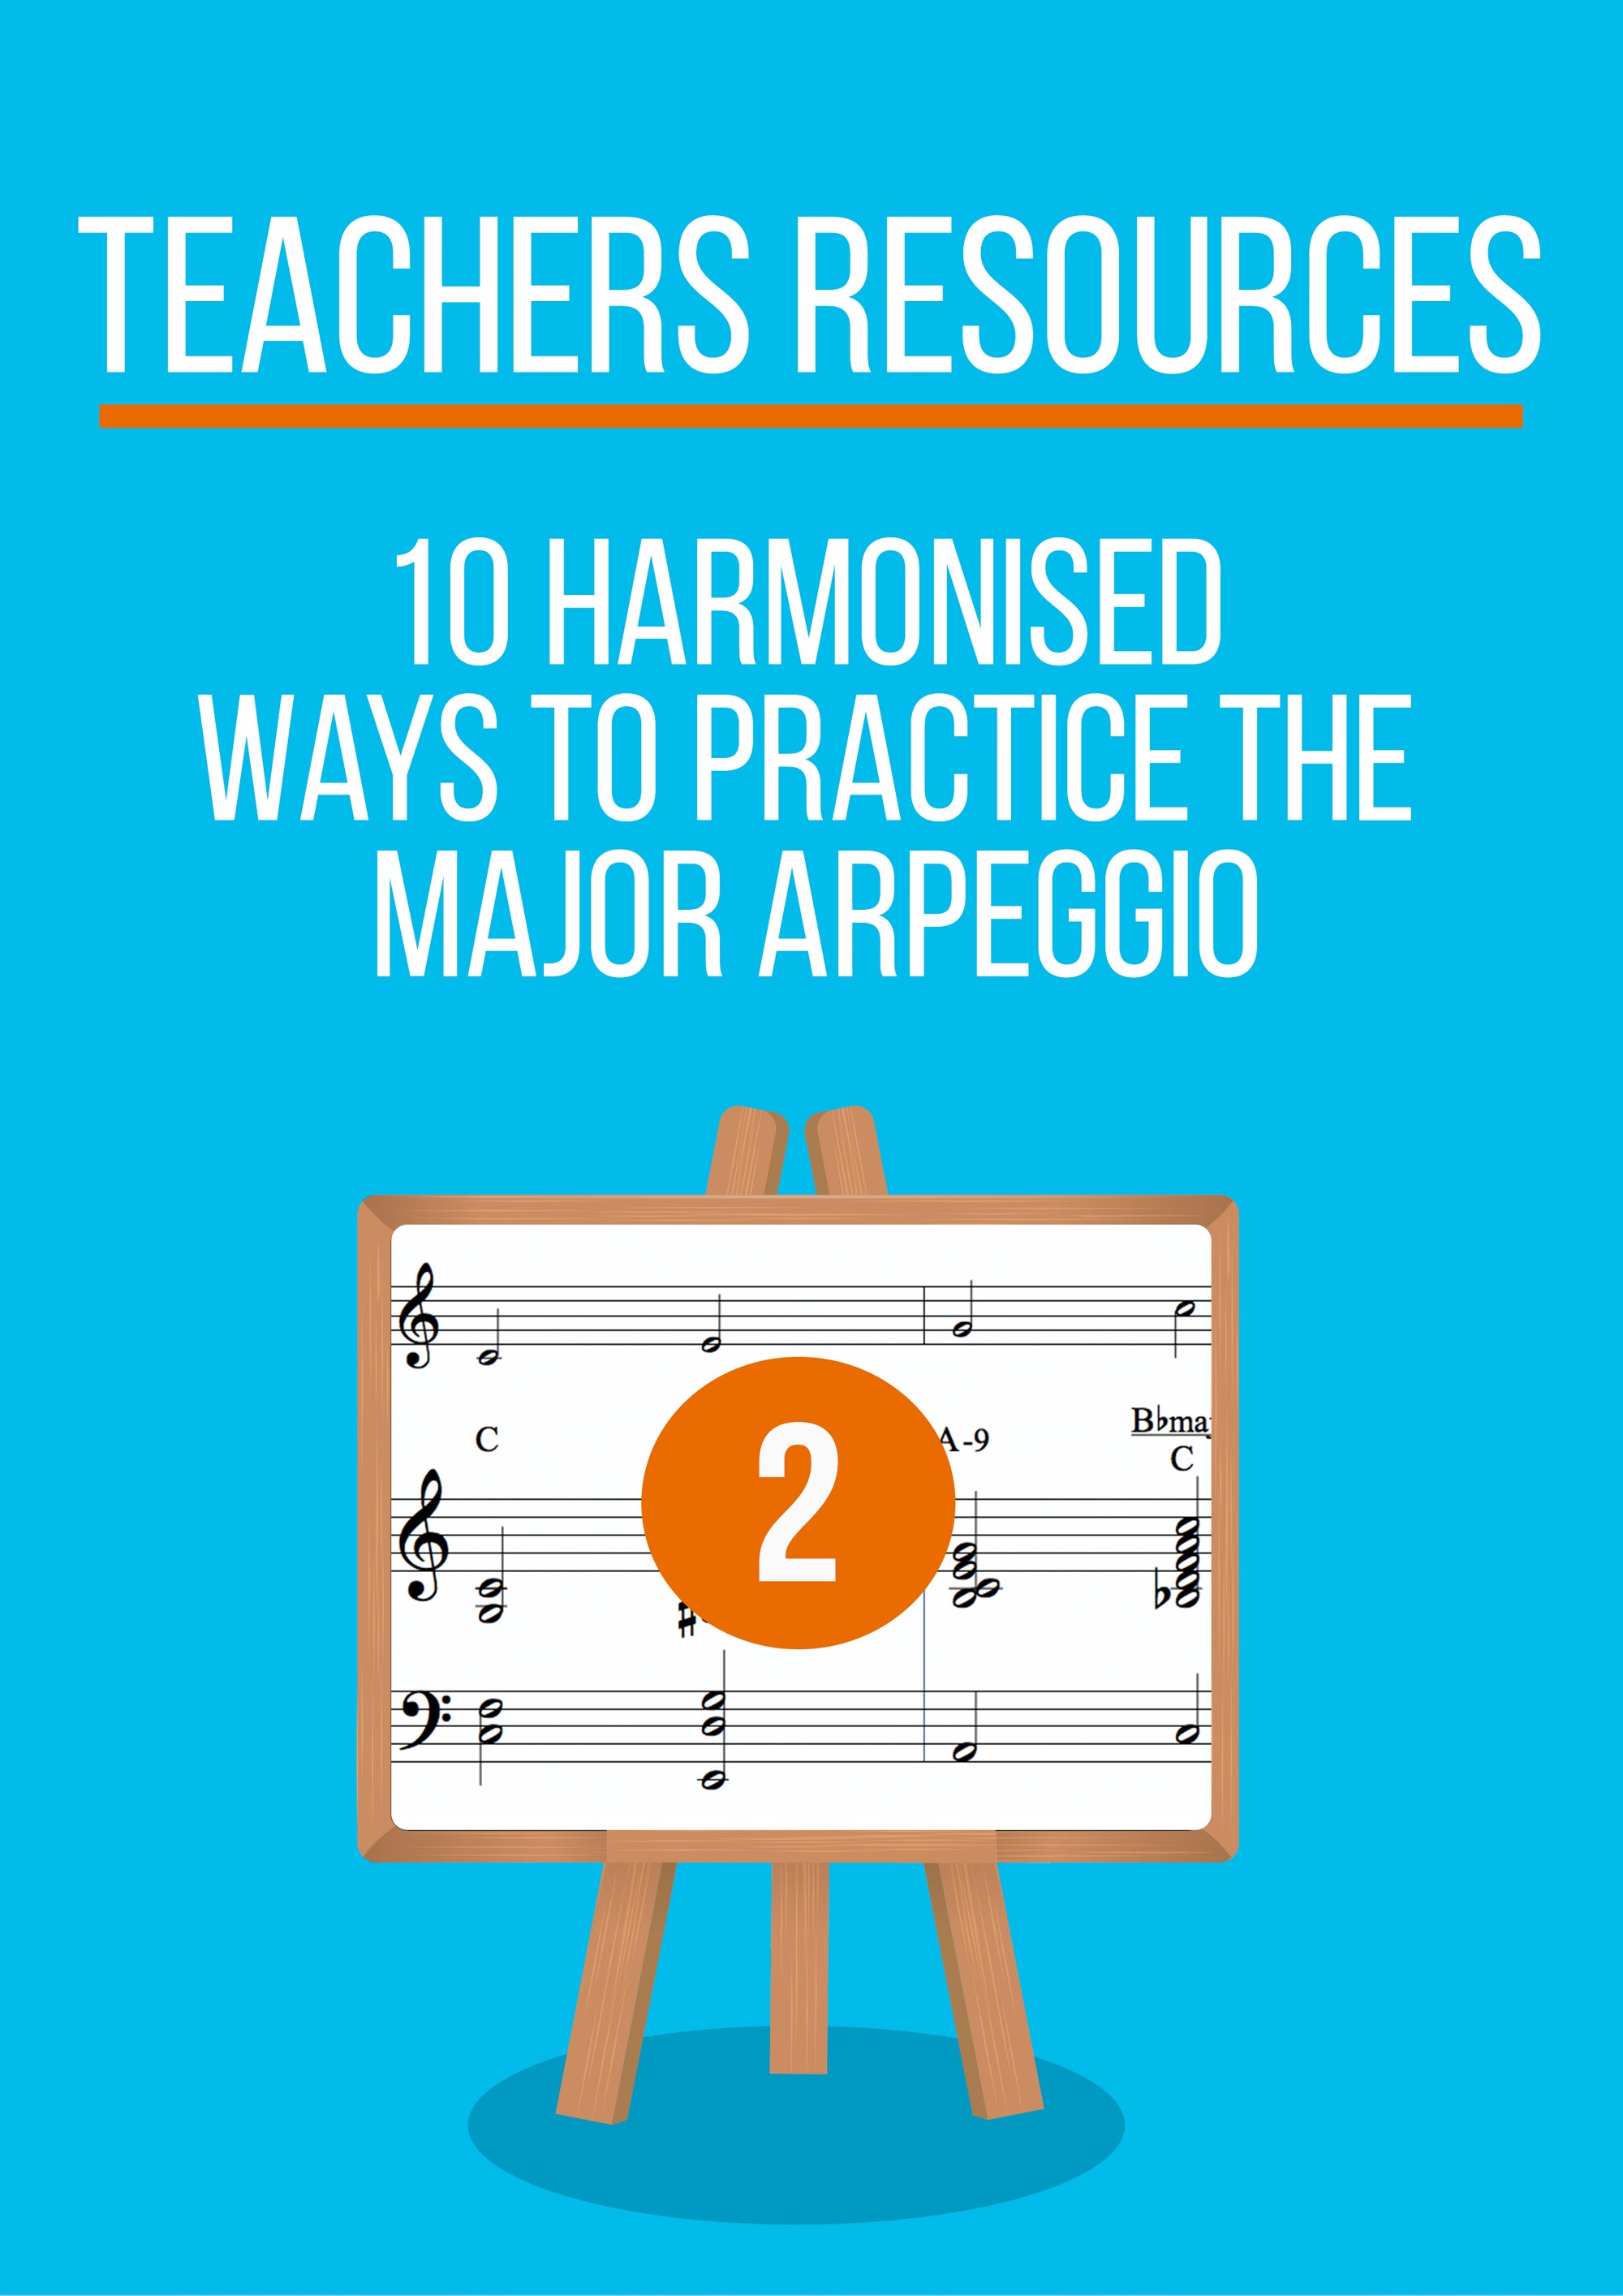 Teachers resources # 2- Harmonising Major arpeggios